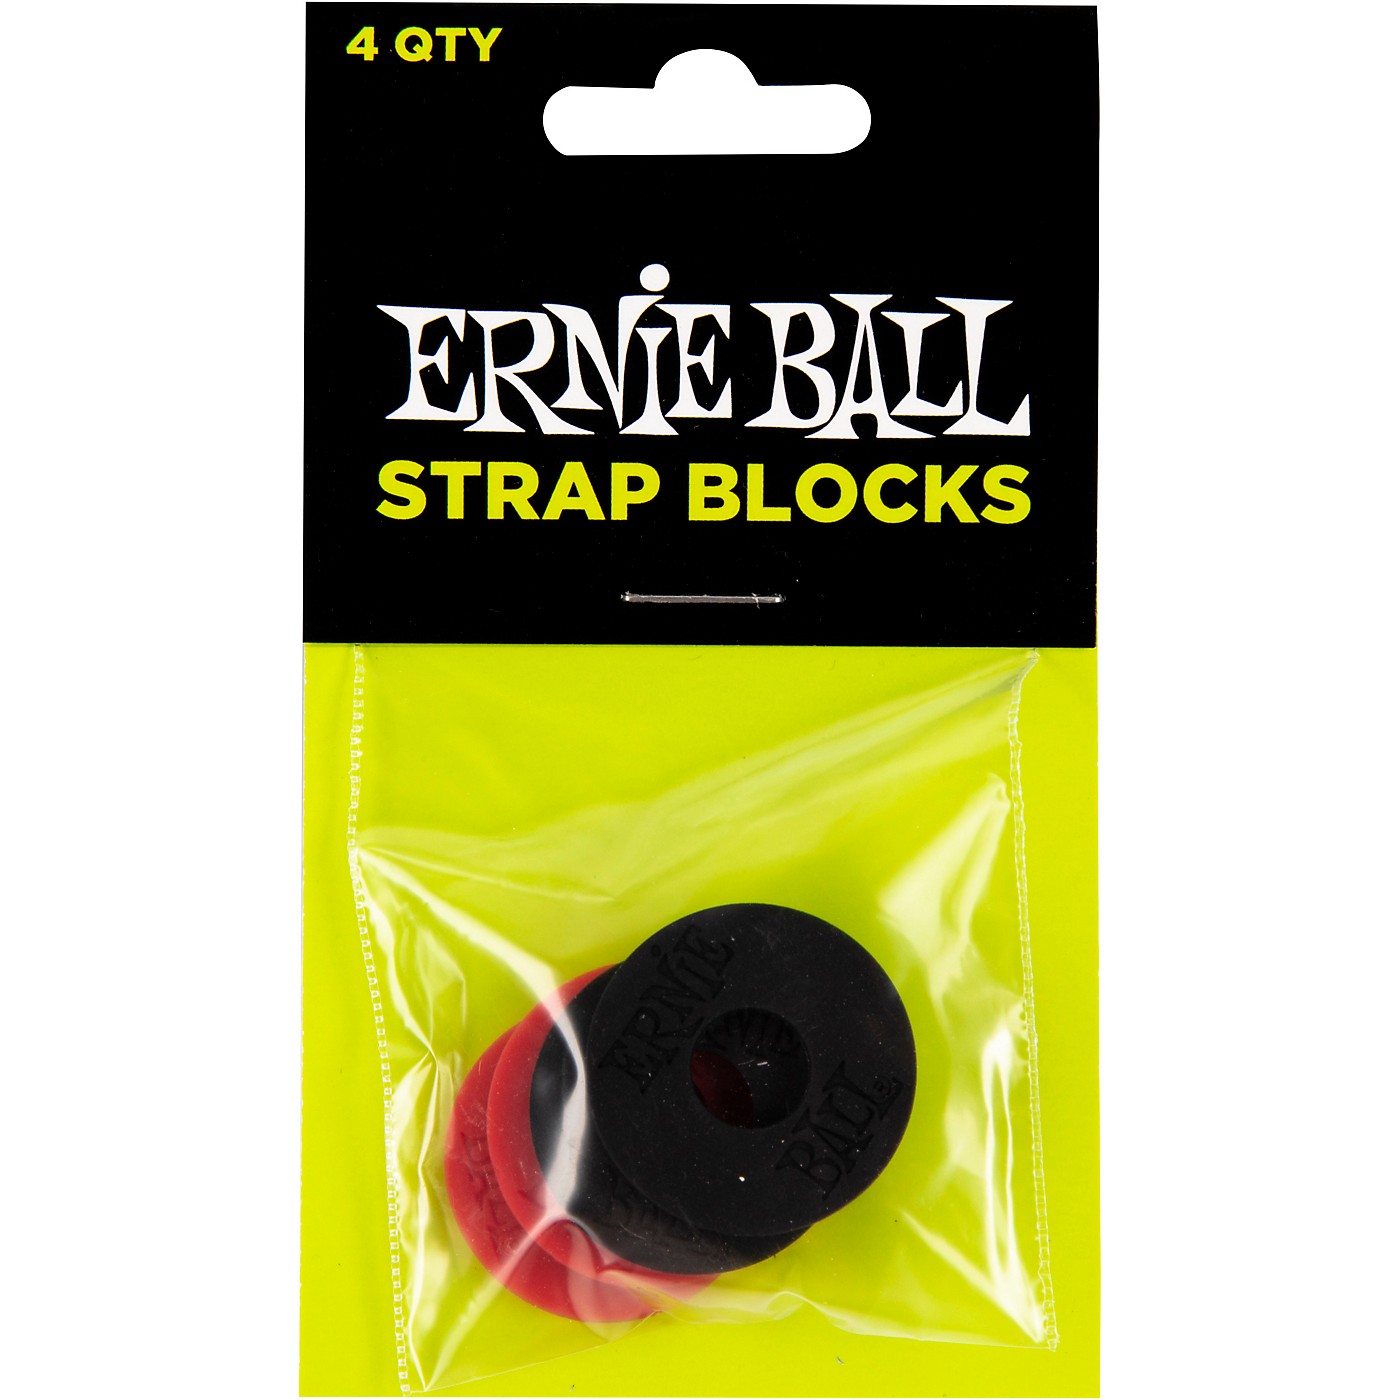 Ernie Ball Strap Blocks 4-Pack, Black and Red thumbnail